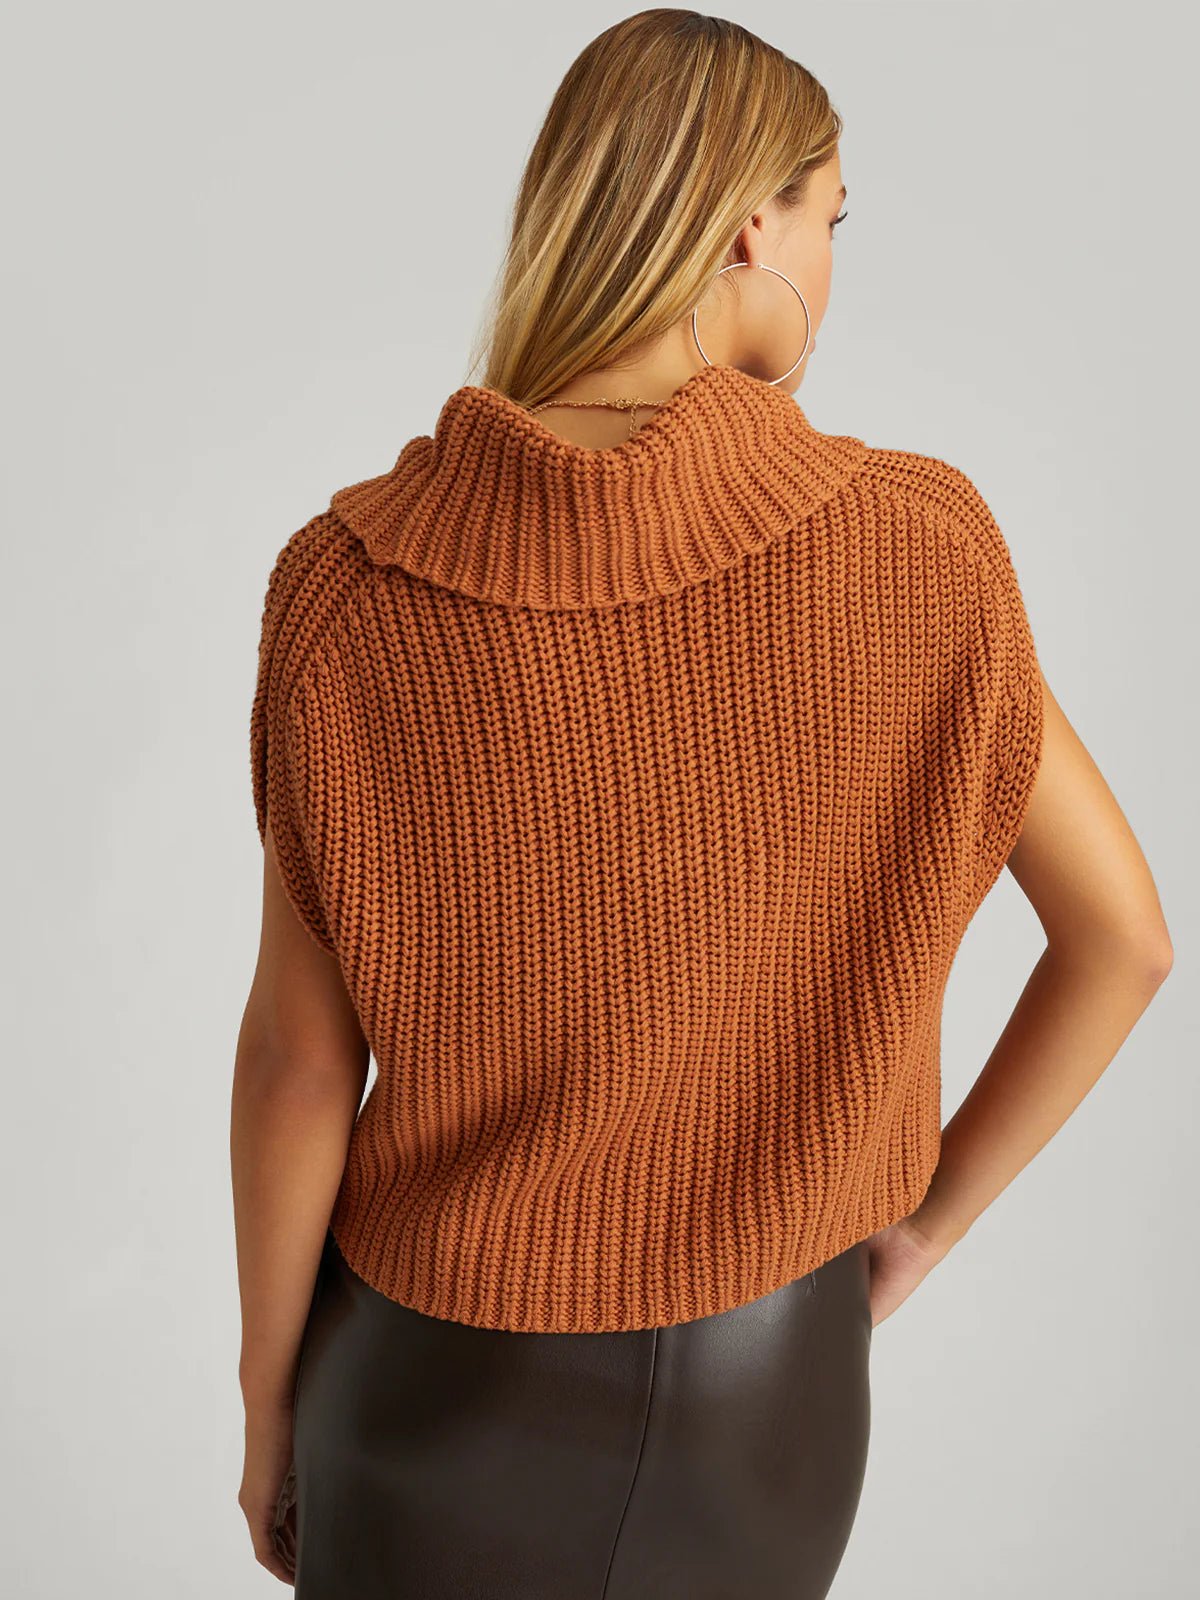 525 America Cate Sleeveless Turtleneck Sweater in Toasted Almond - Estilo Boutique